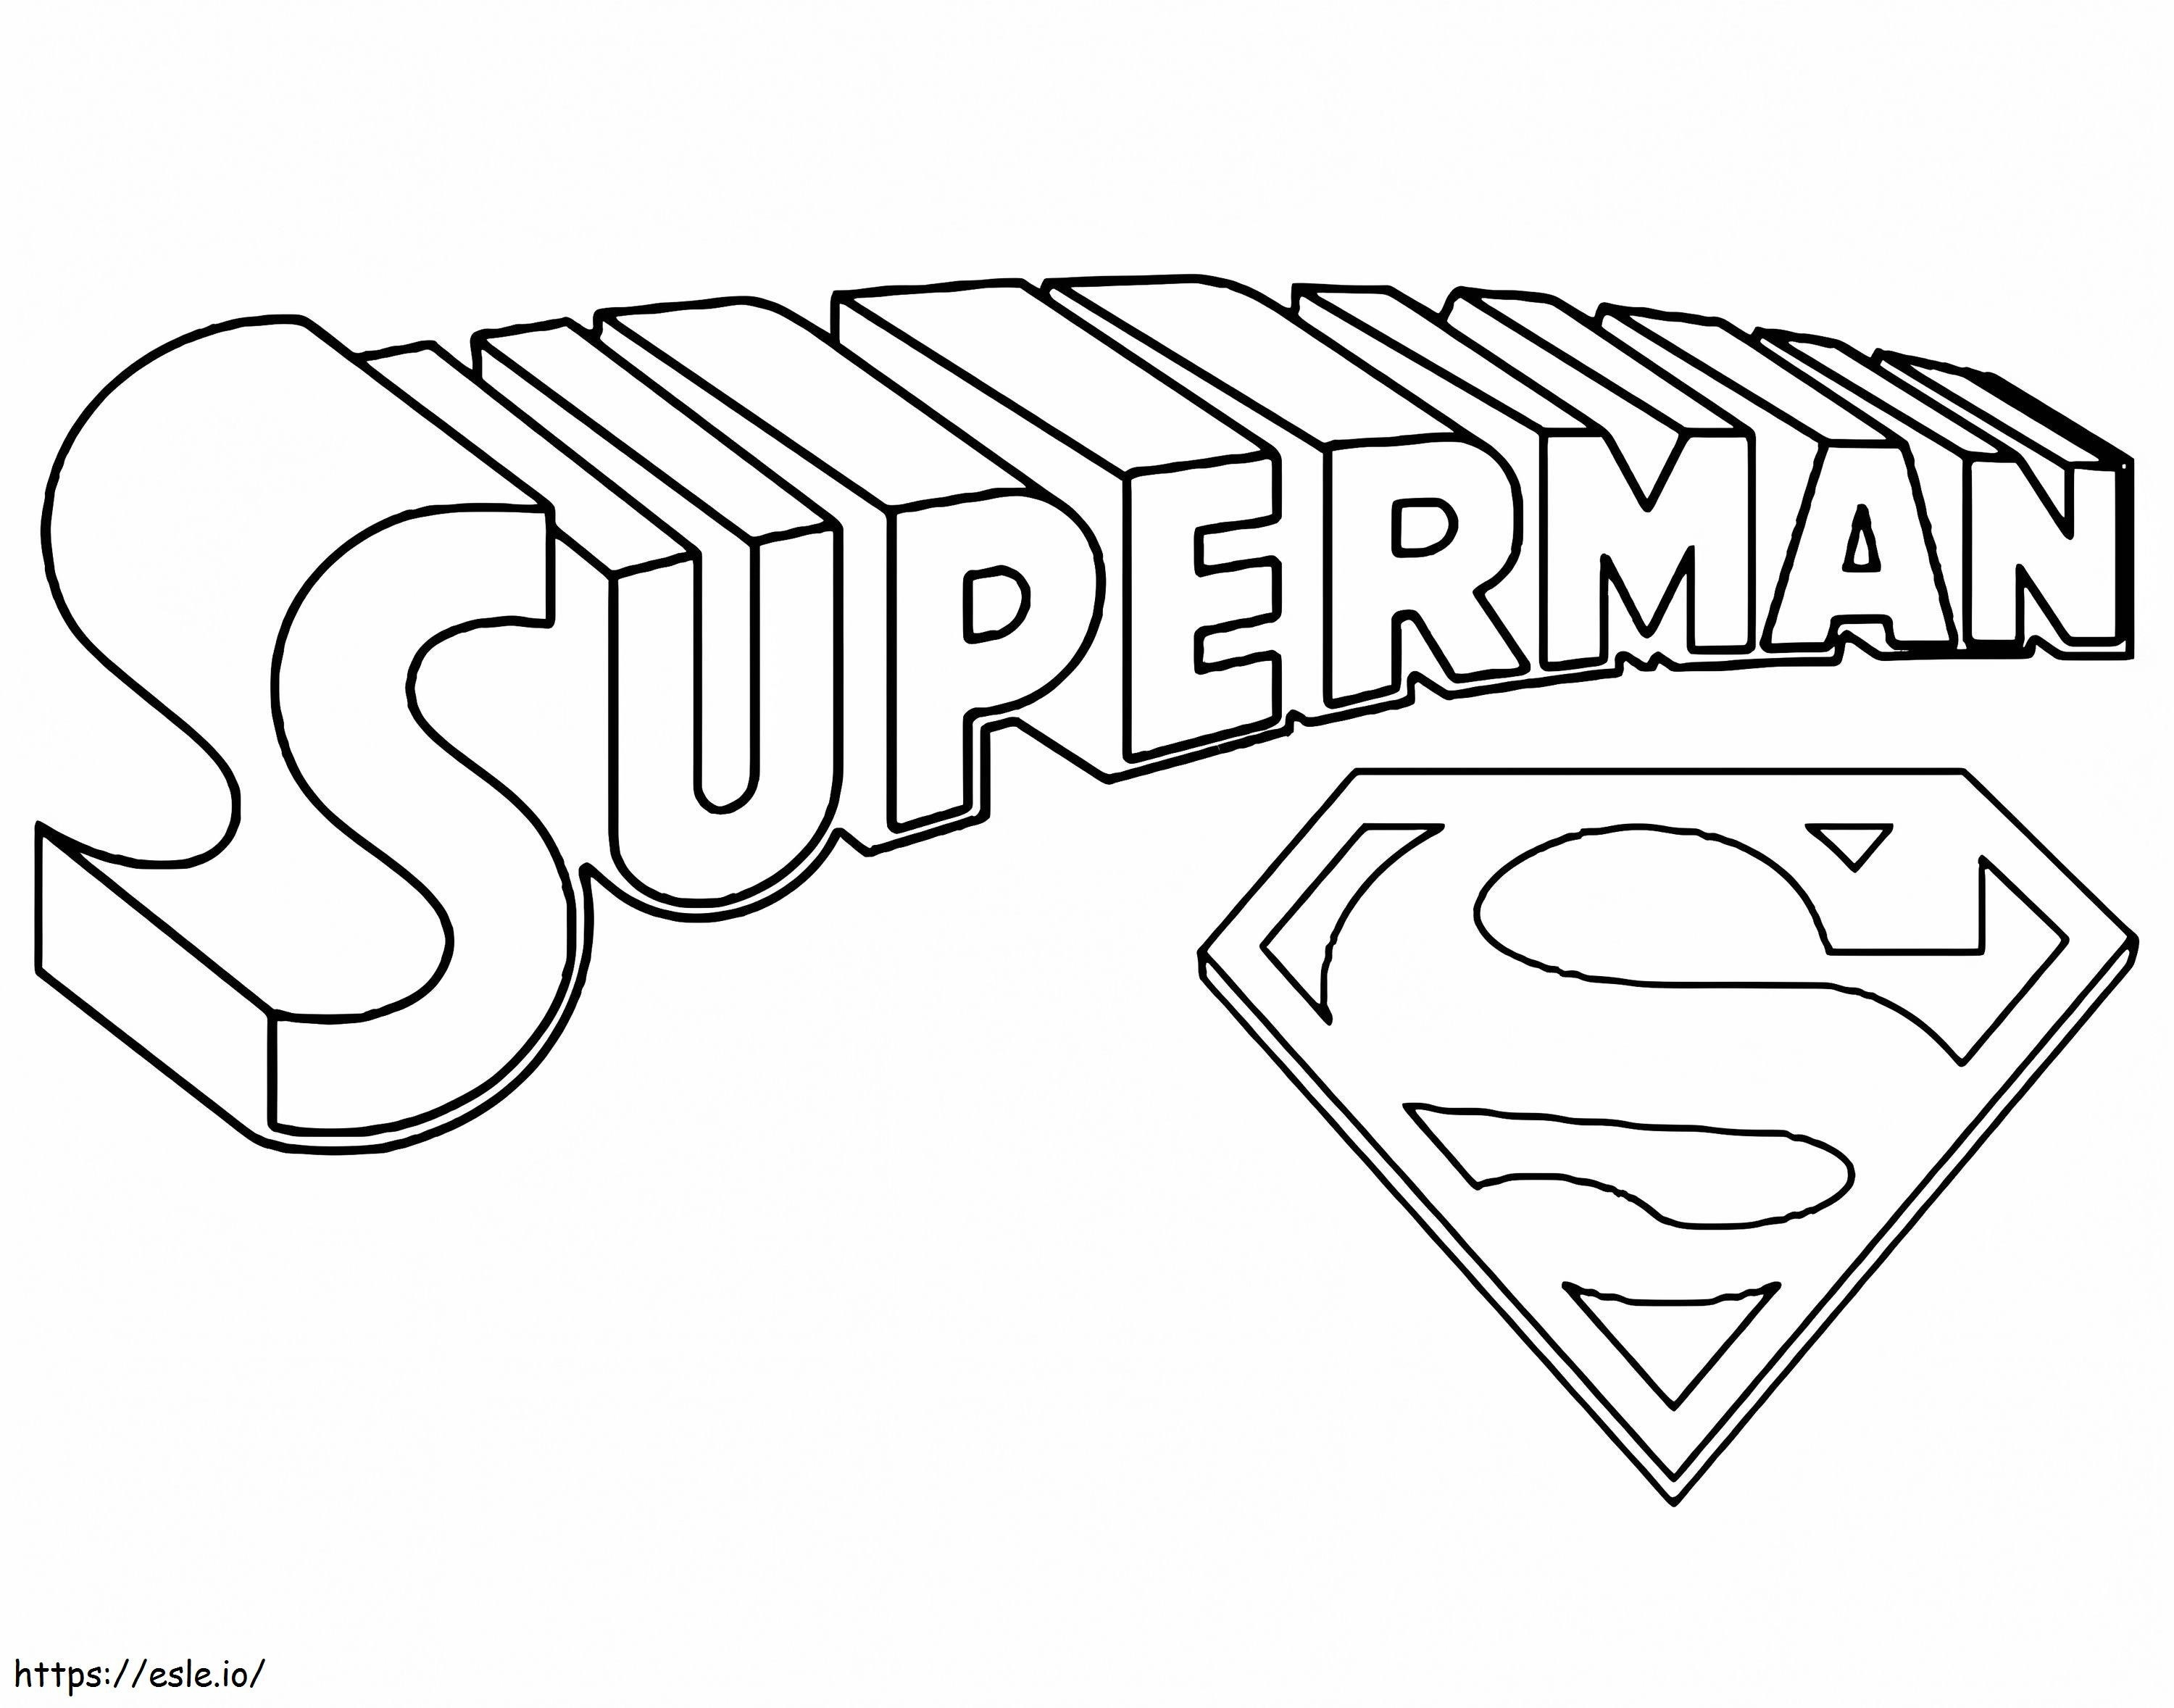 Tytuł i symbol Supermana kolorowanka